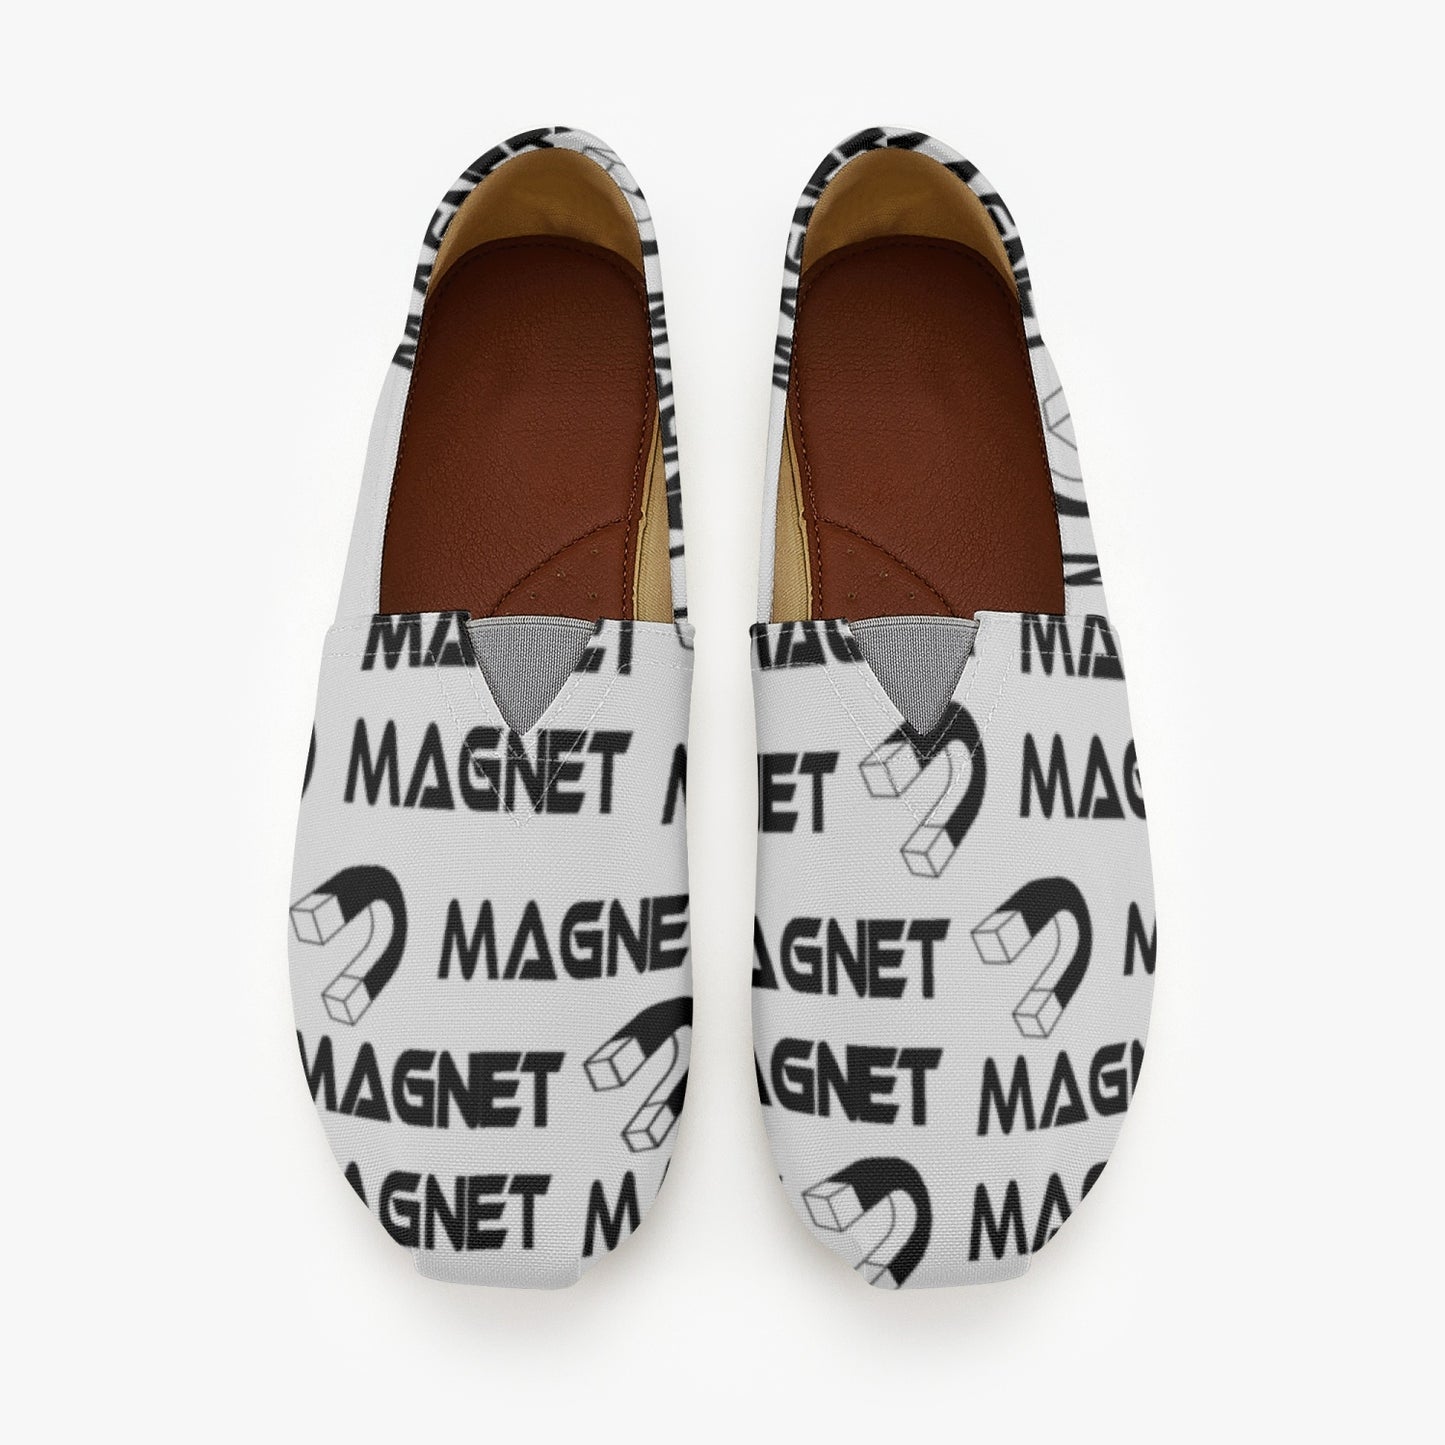 Magnet Super comfort leisure Shoes